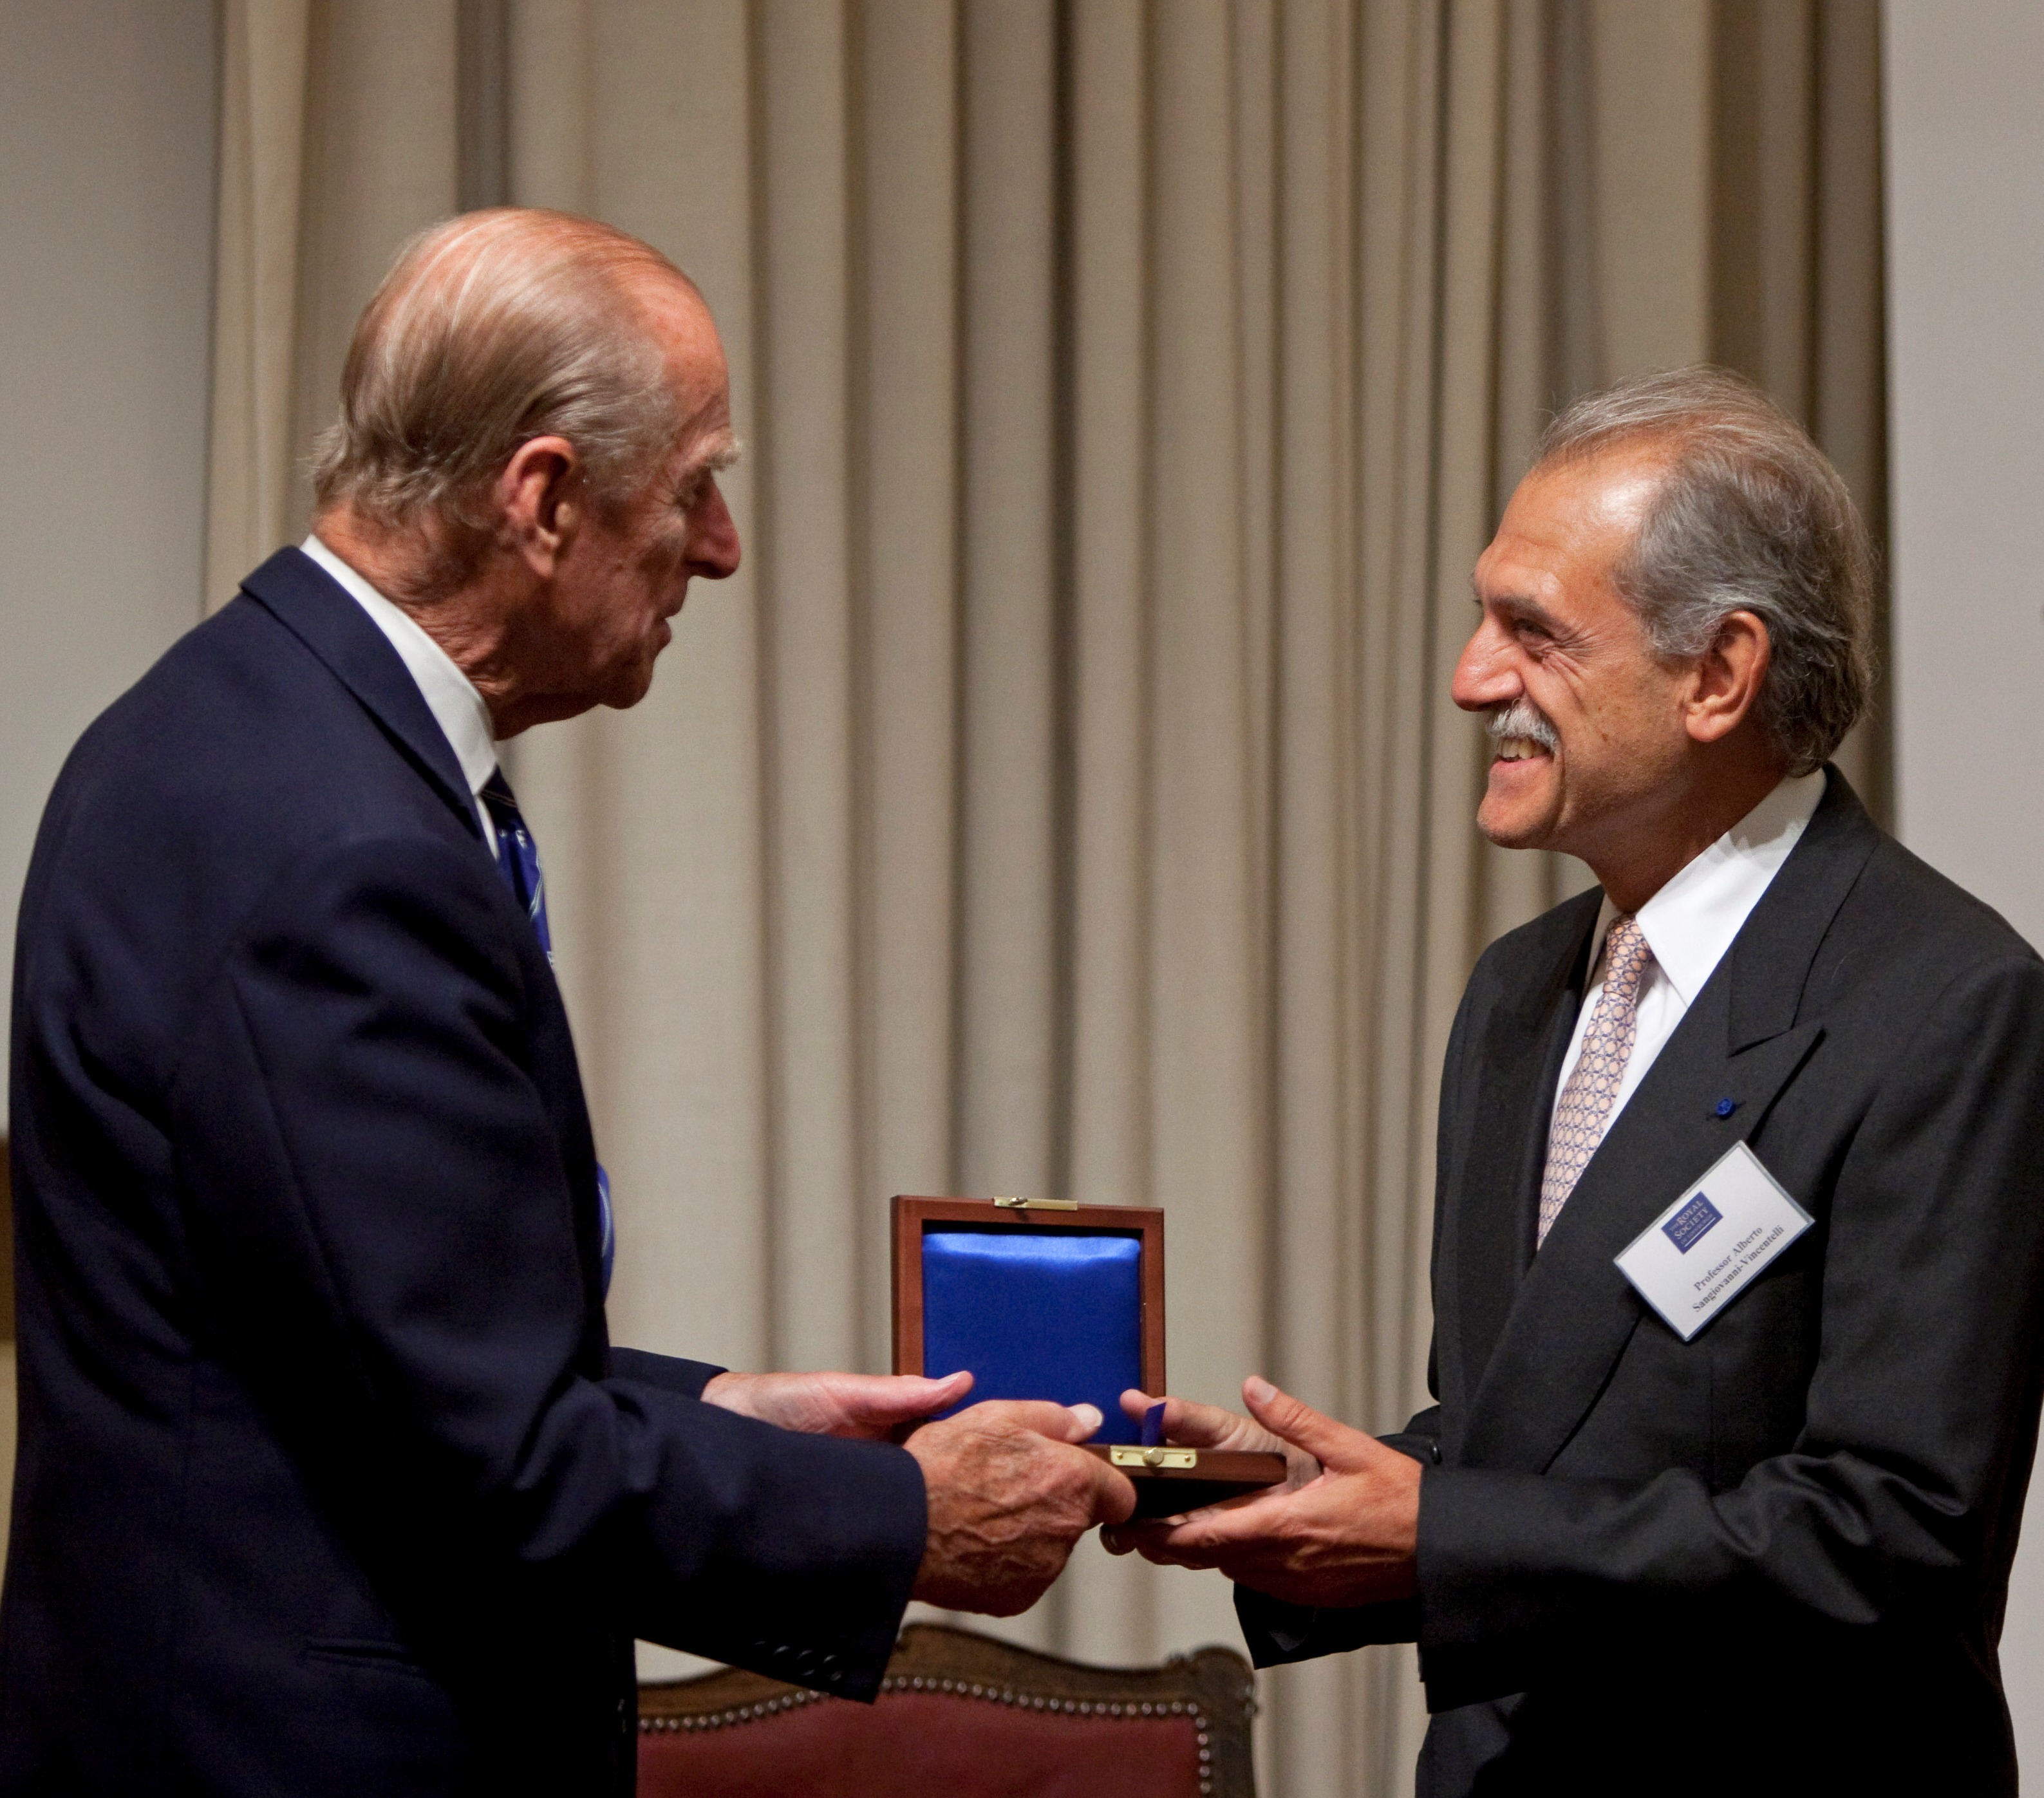  A photo of Sangiovanni-Vincentelli receiving an award.